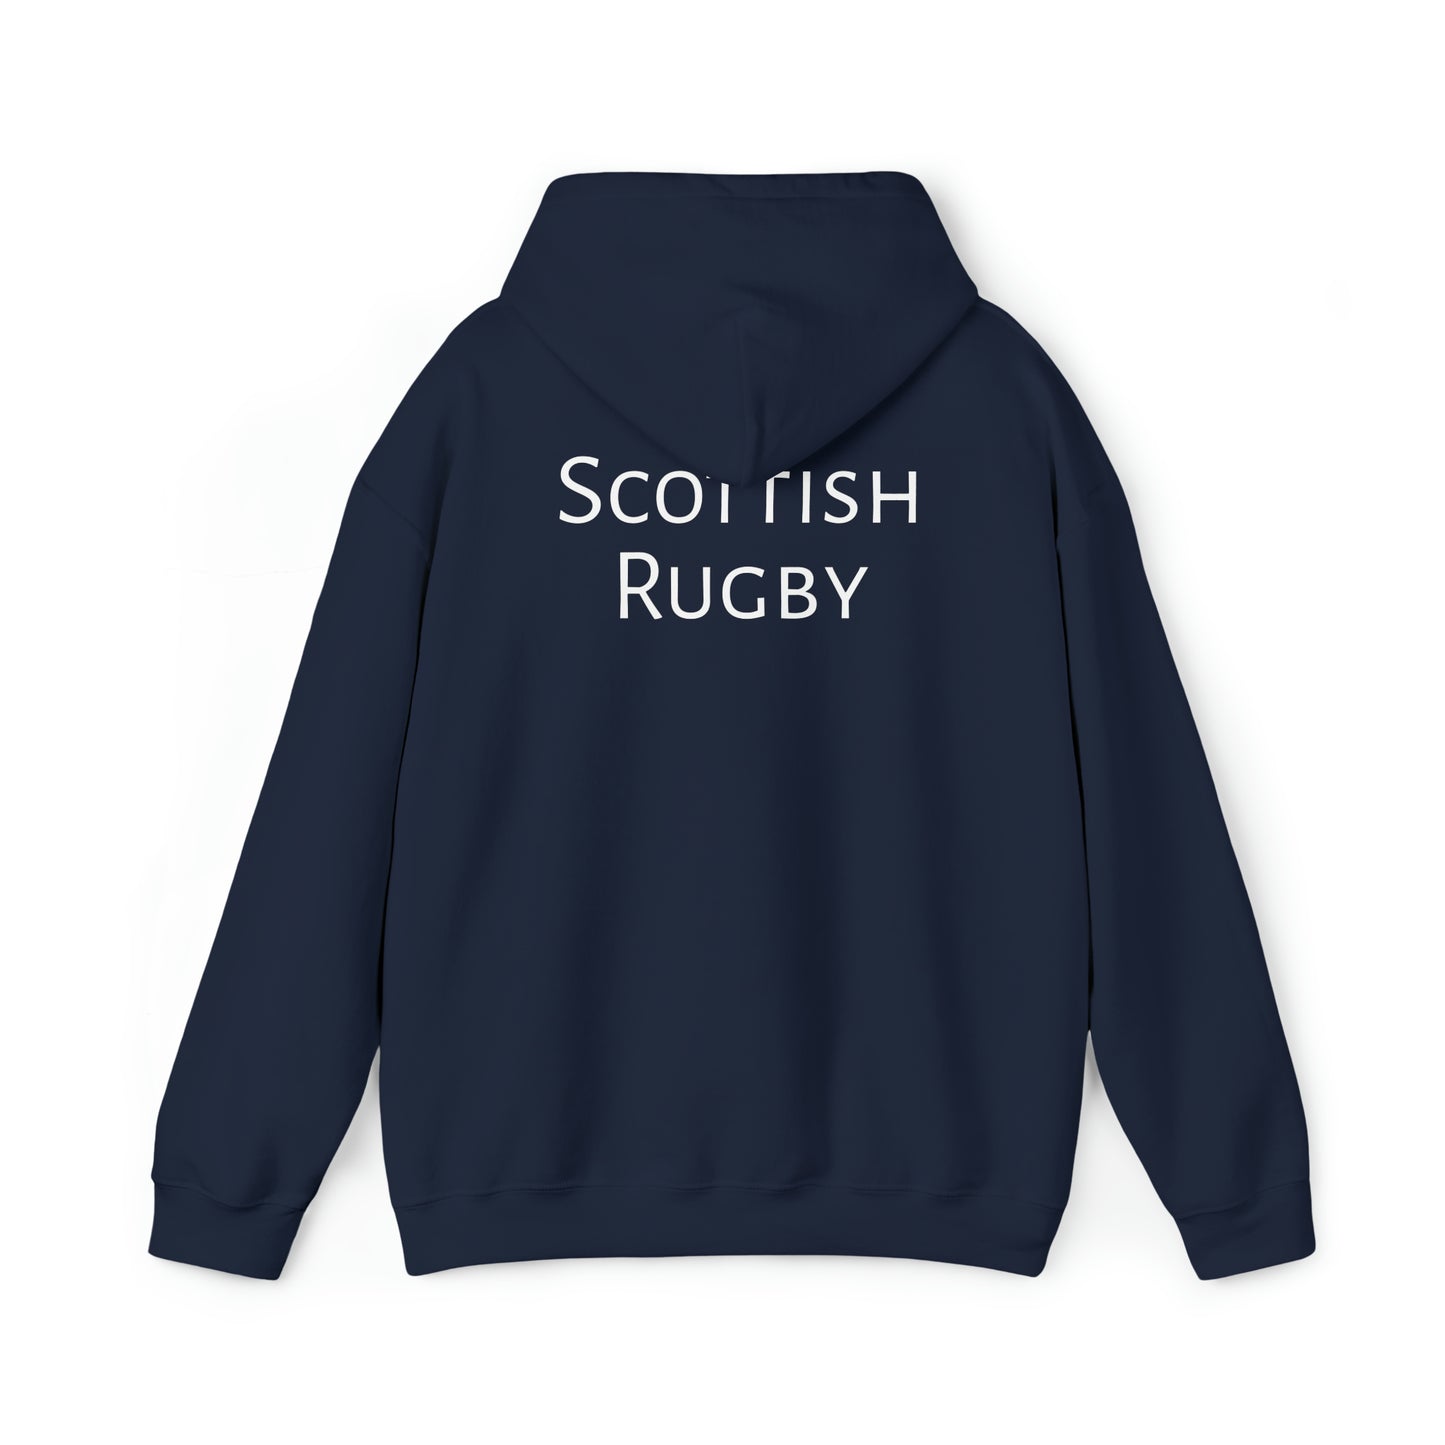 Celebrating Scotland - dark hoodies